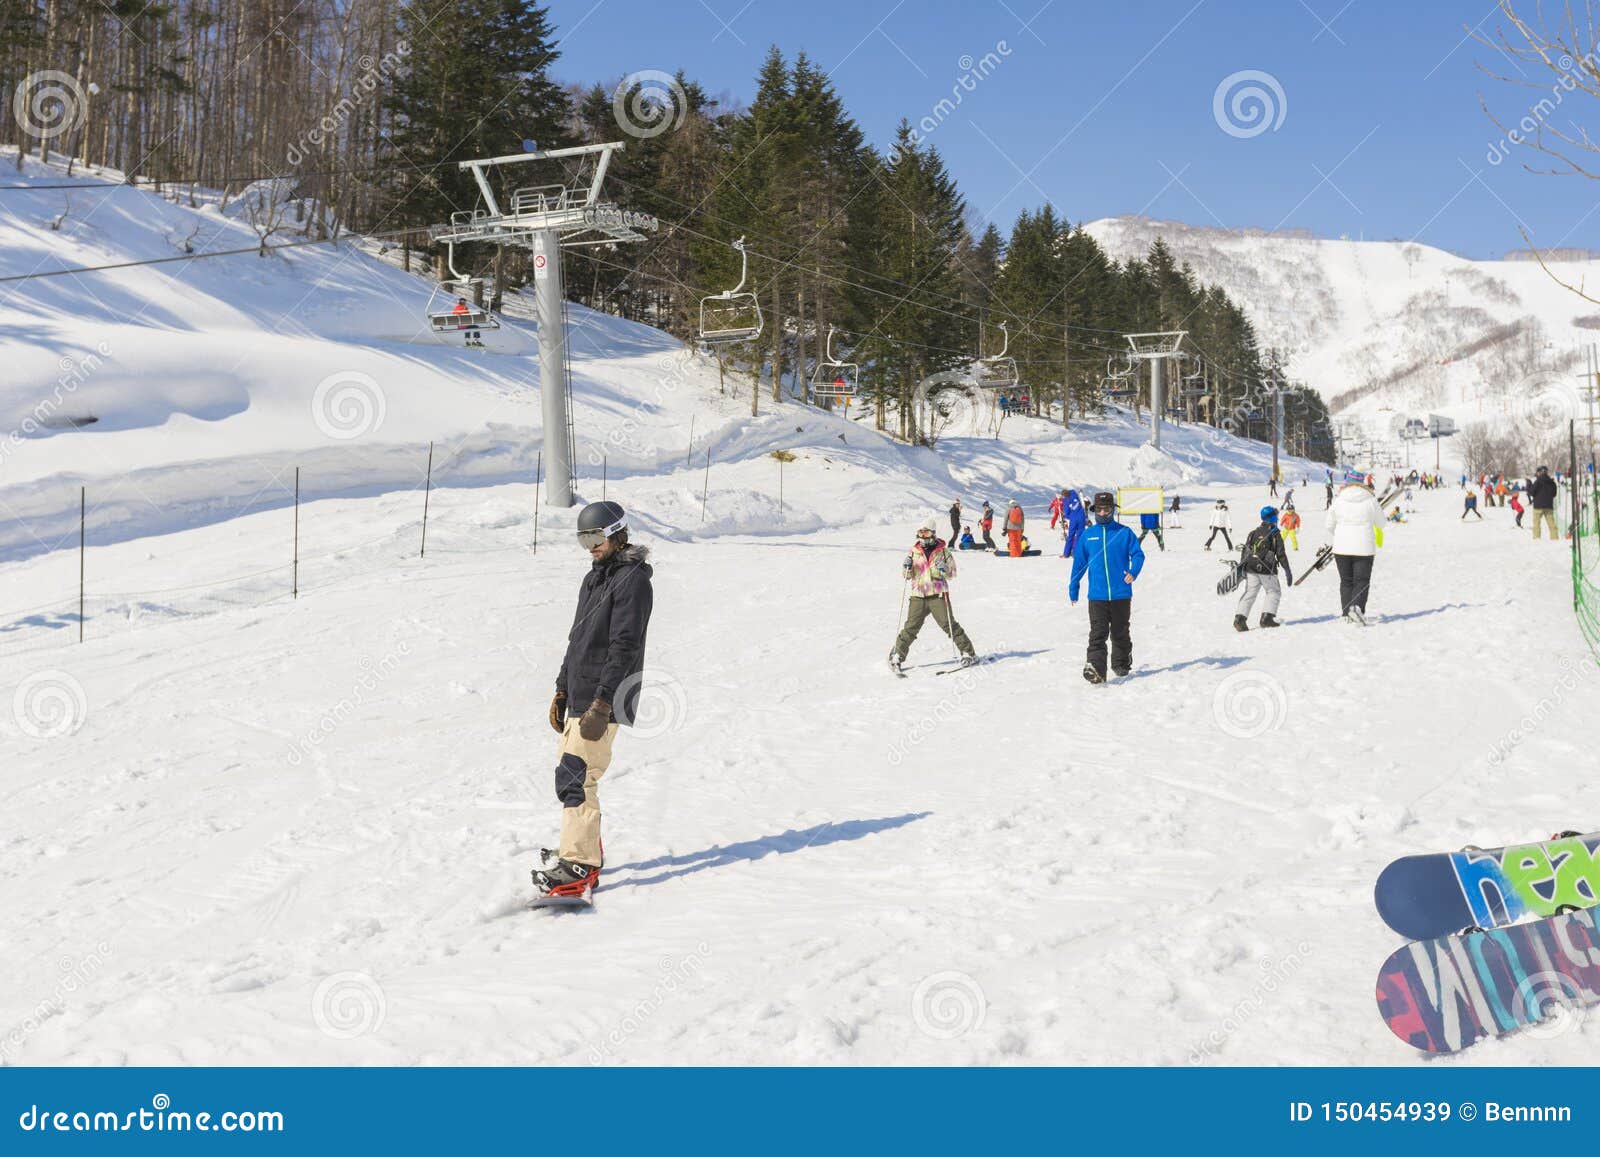 The Ski Slope of Niseko Mt. Resort Grand Hirafu at Niseko, Hokkaido ...